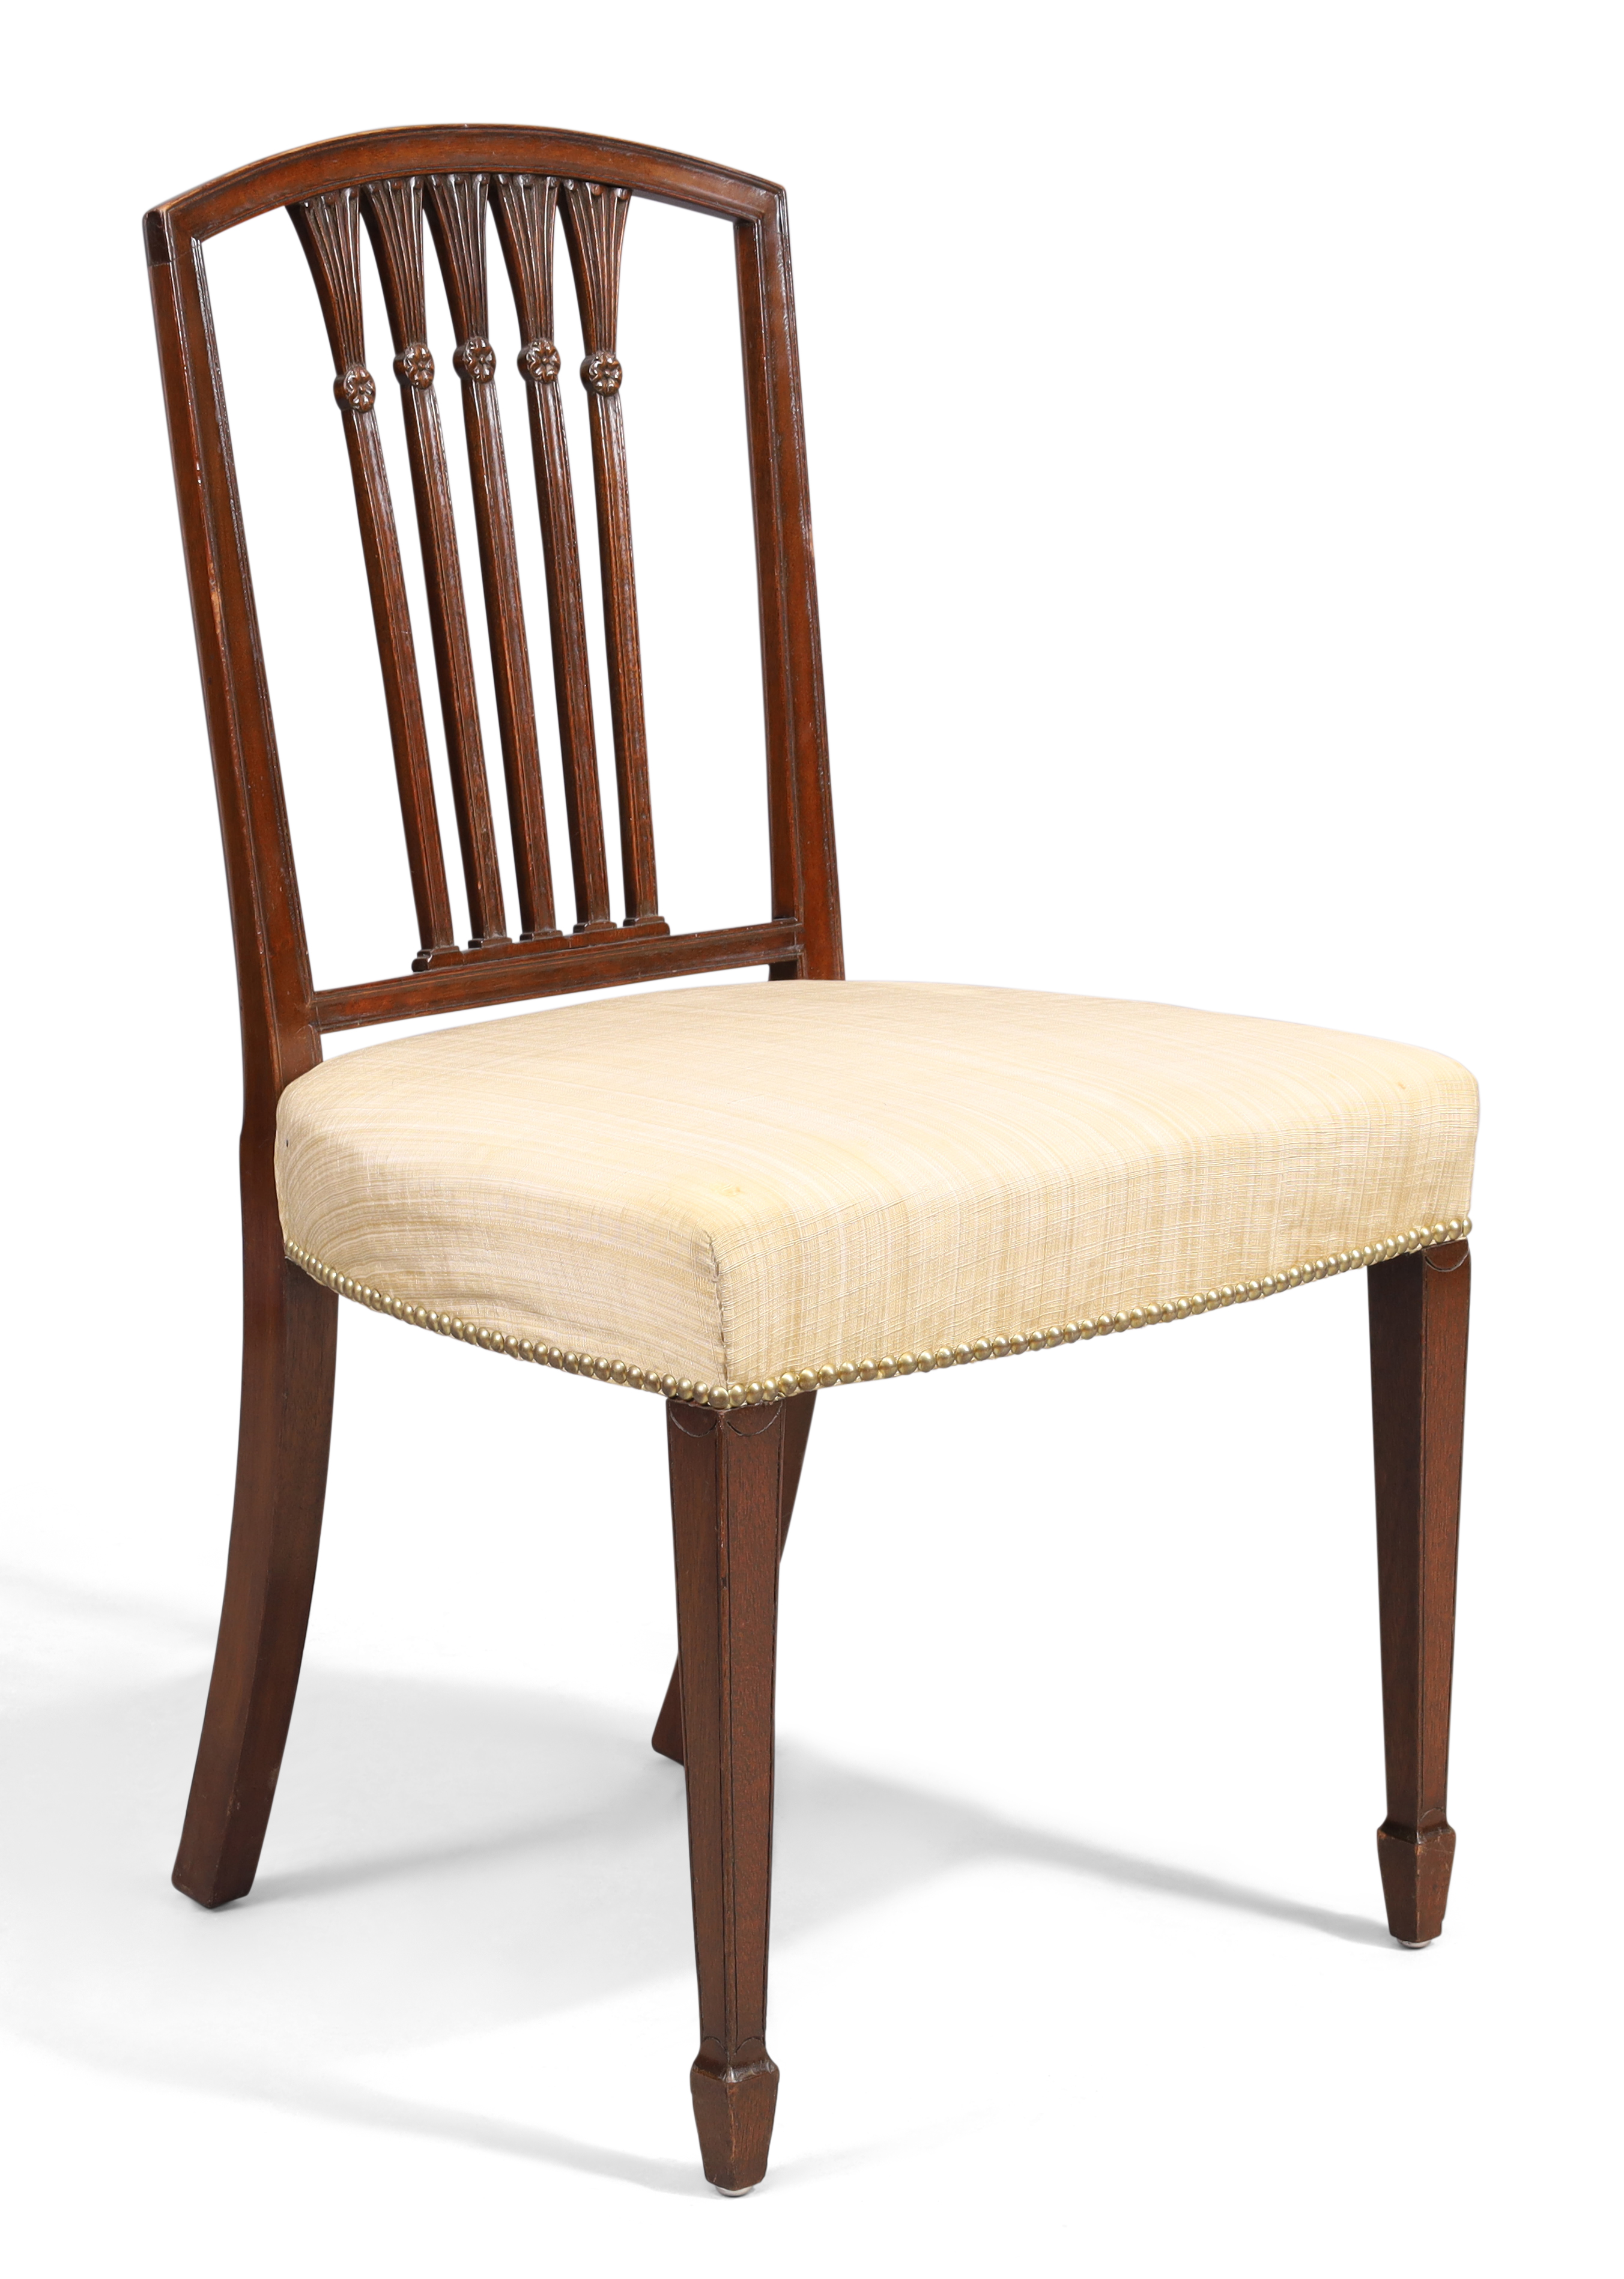 A set of twelve George III Hepplewhite style mahogany dining chairs - Image 4 of 4